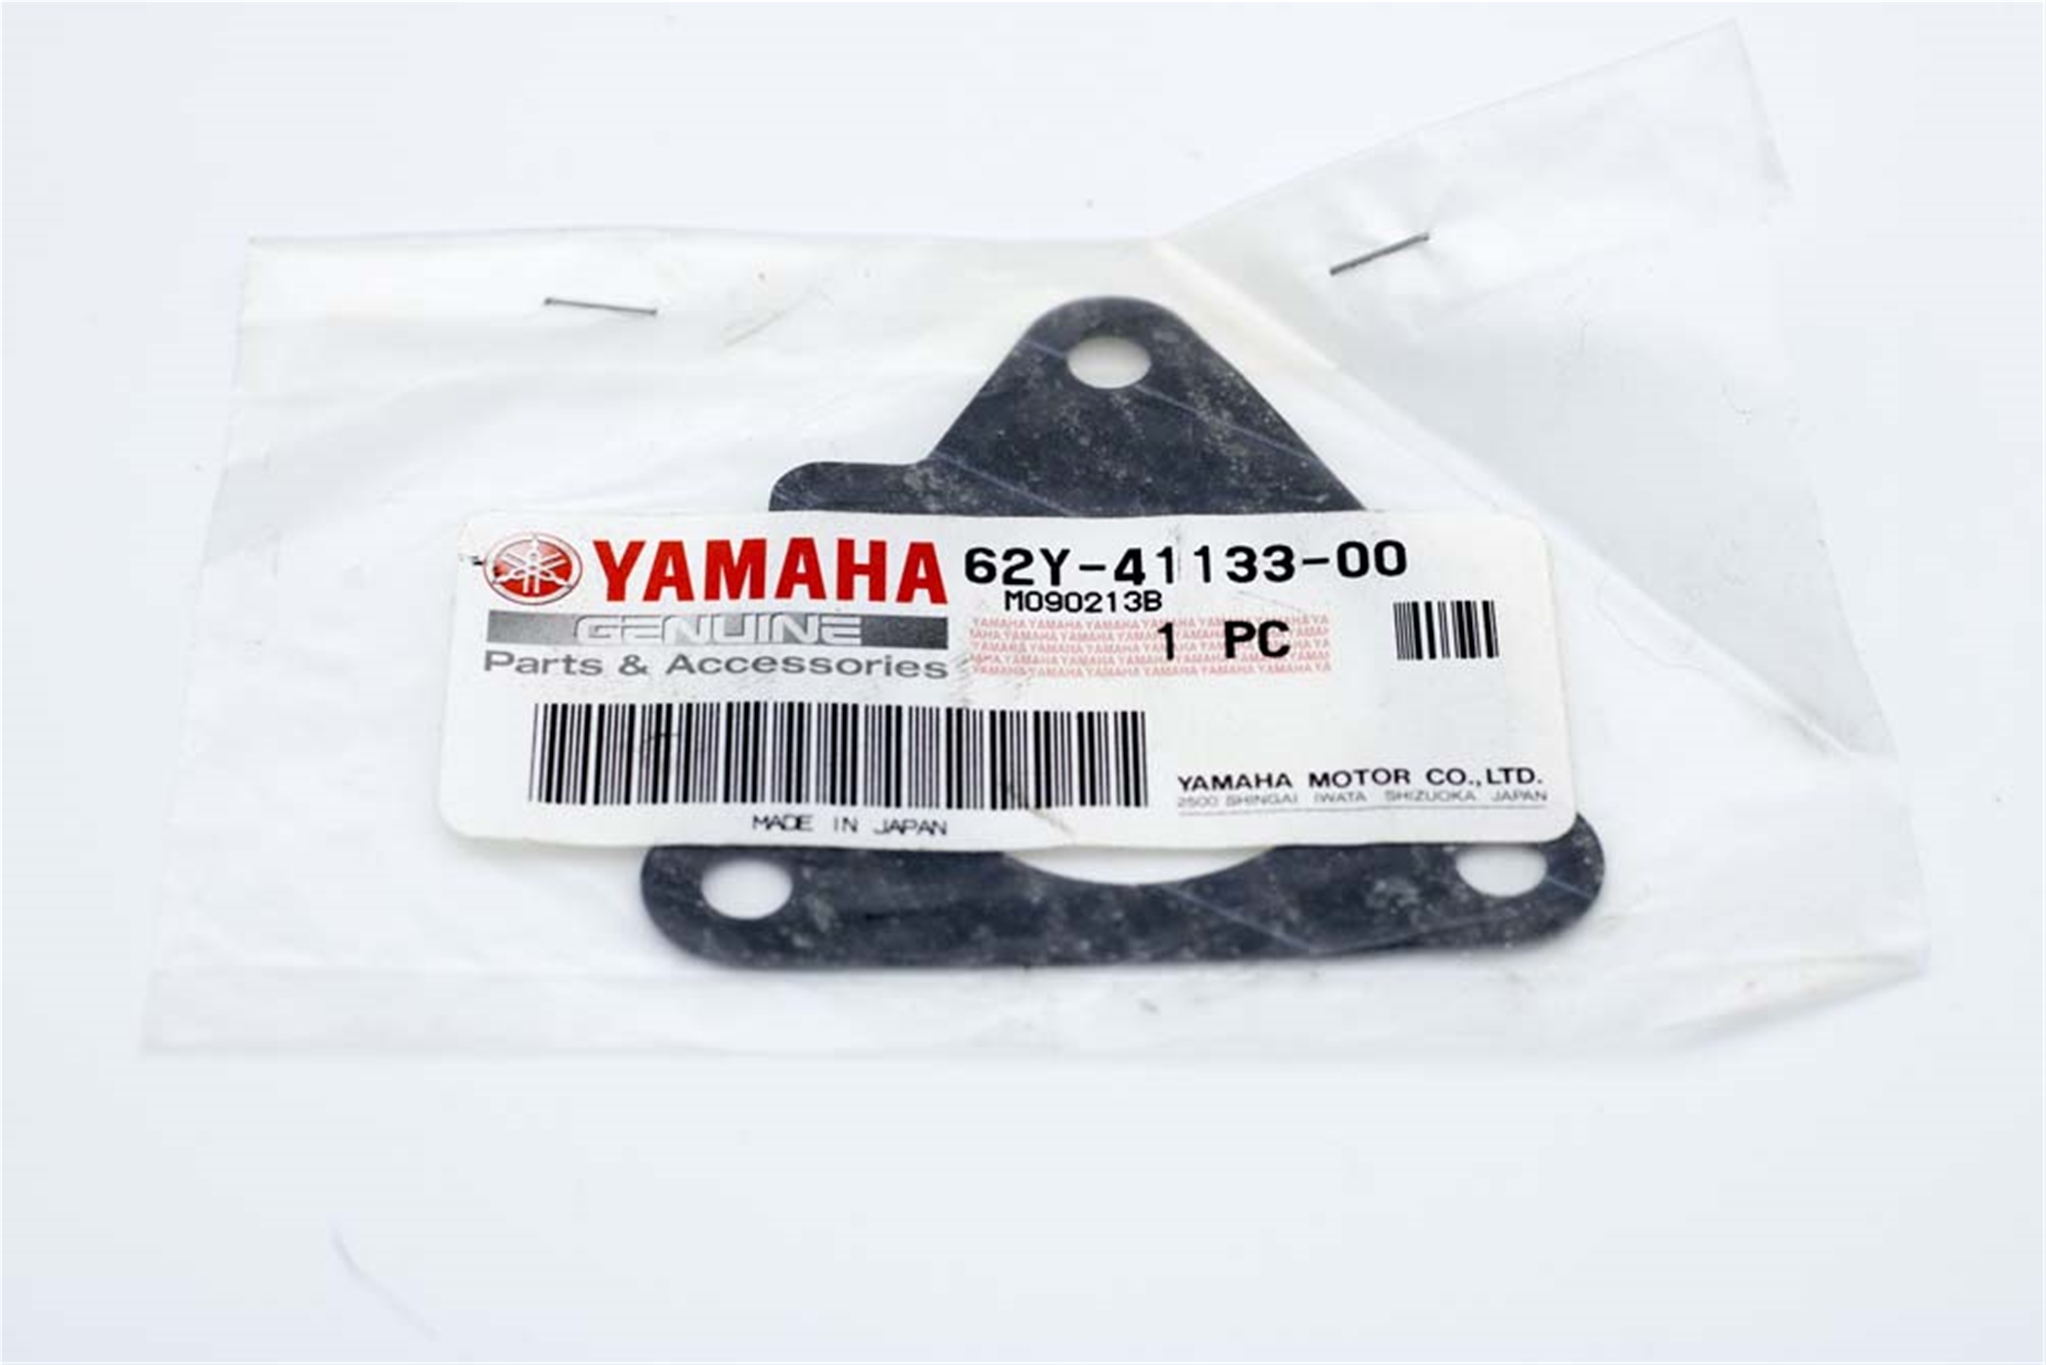 62Y4113300 Gasket Exhaust Manifold Yamaha